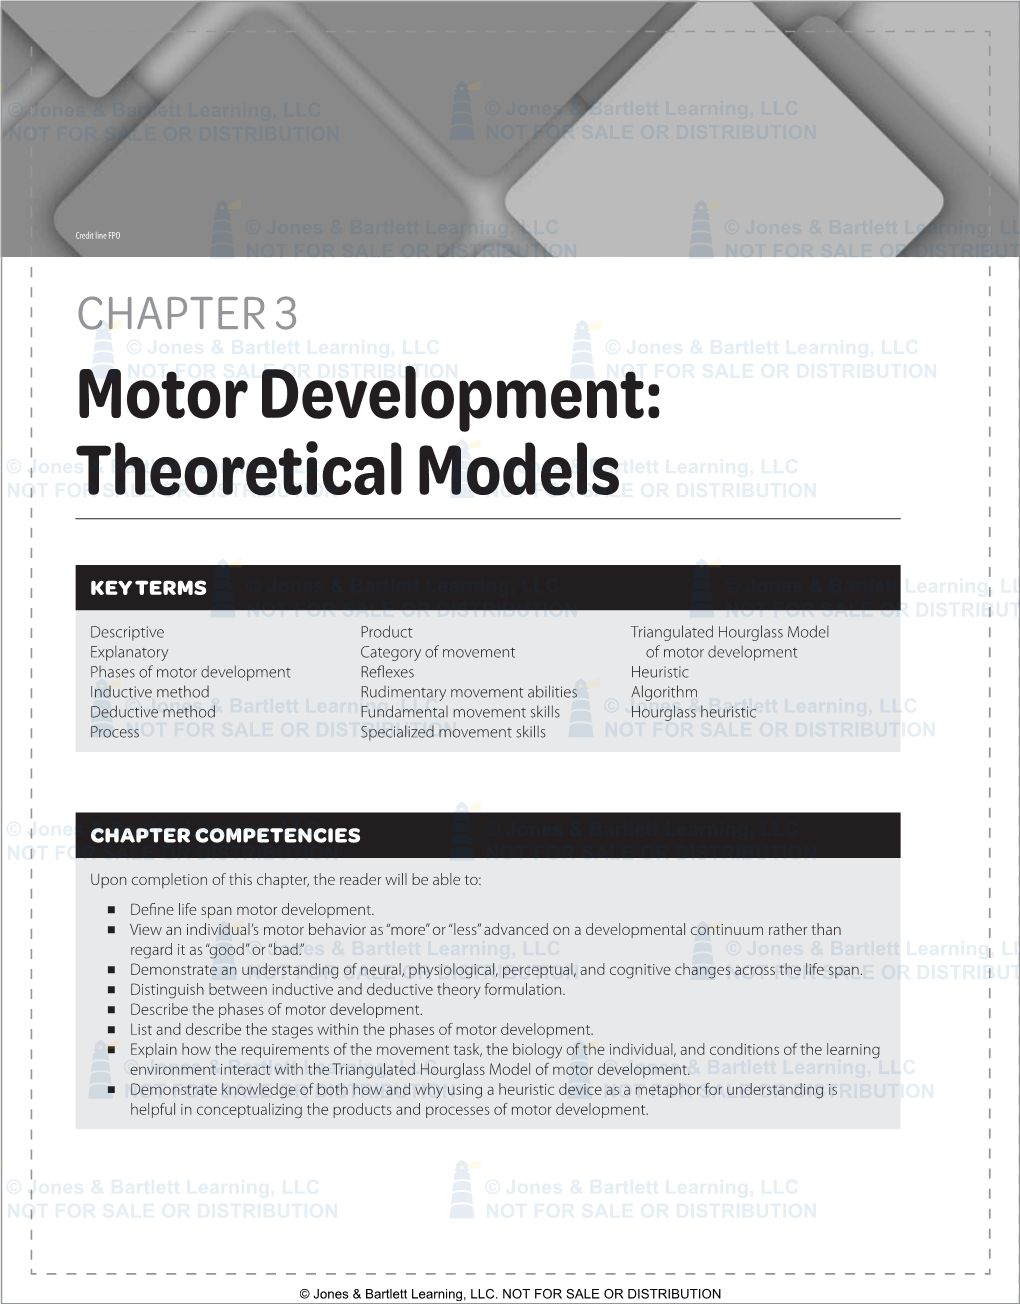 Motor Development: Theoretical Models